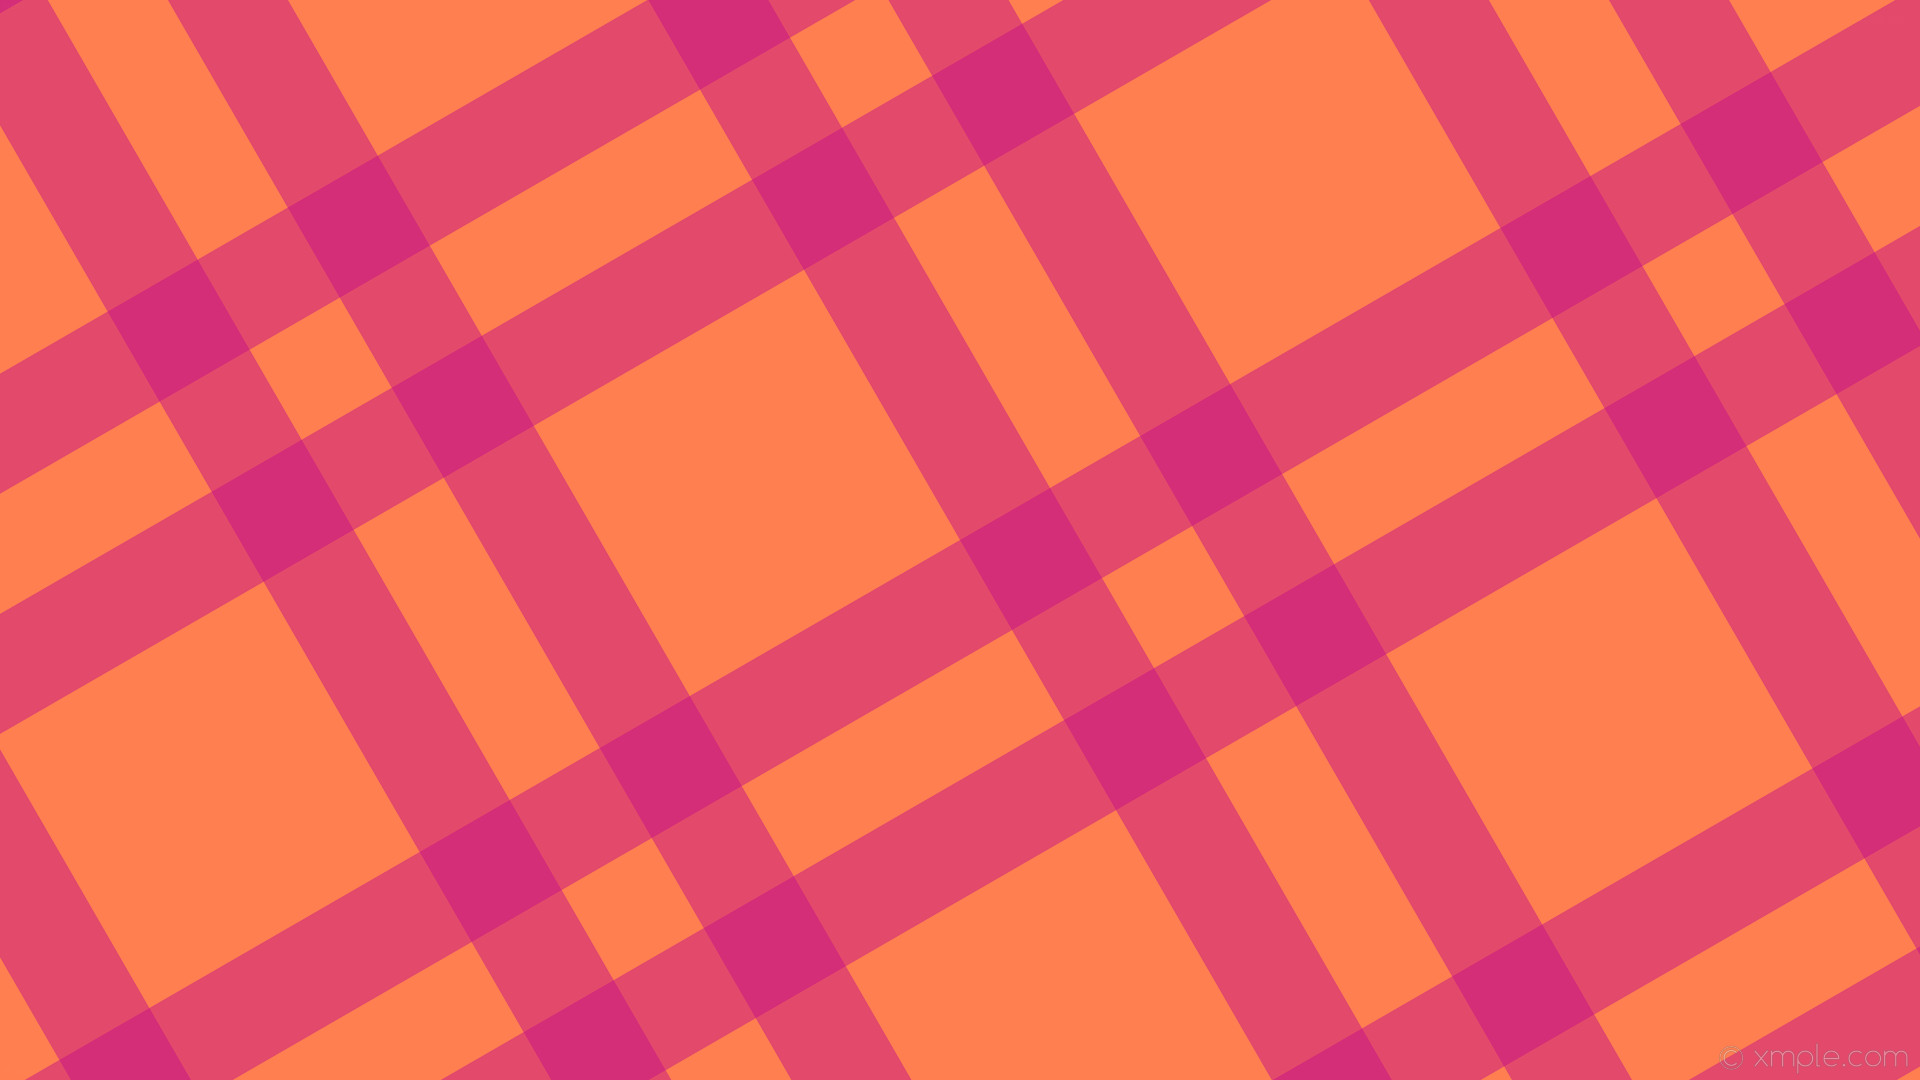 1920x1080 wallpaper pink gingham orange striped dual coral medium violet red #ff7f50  #c71585 30Â°